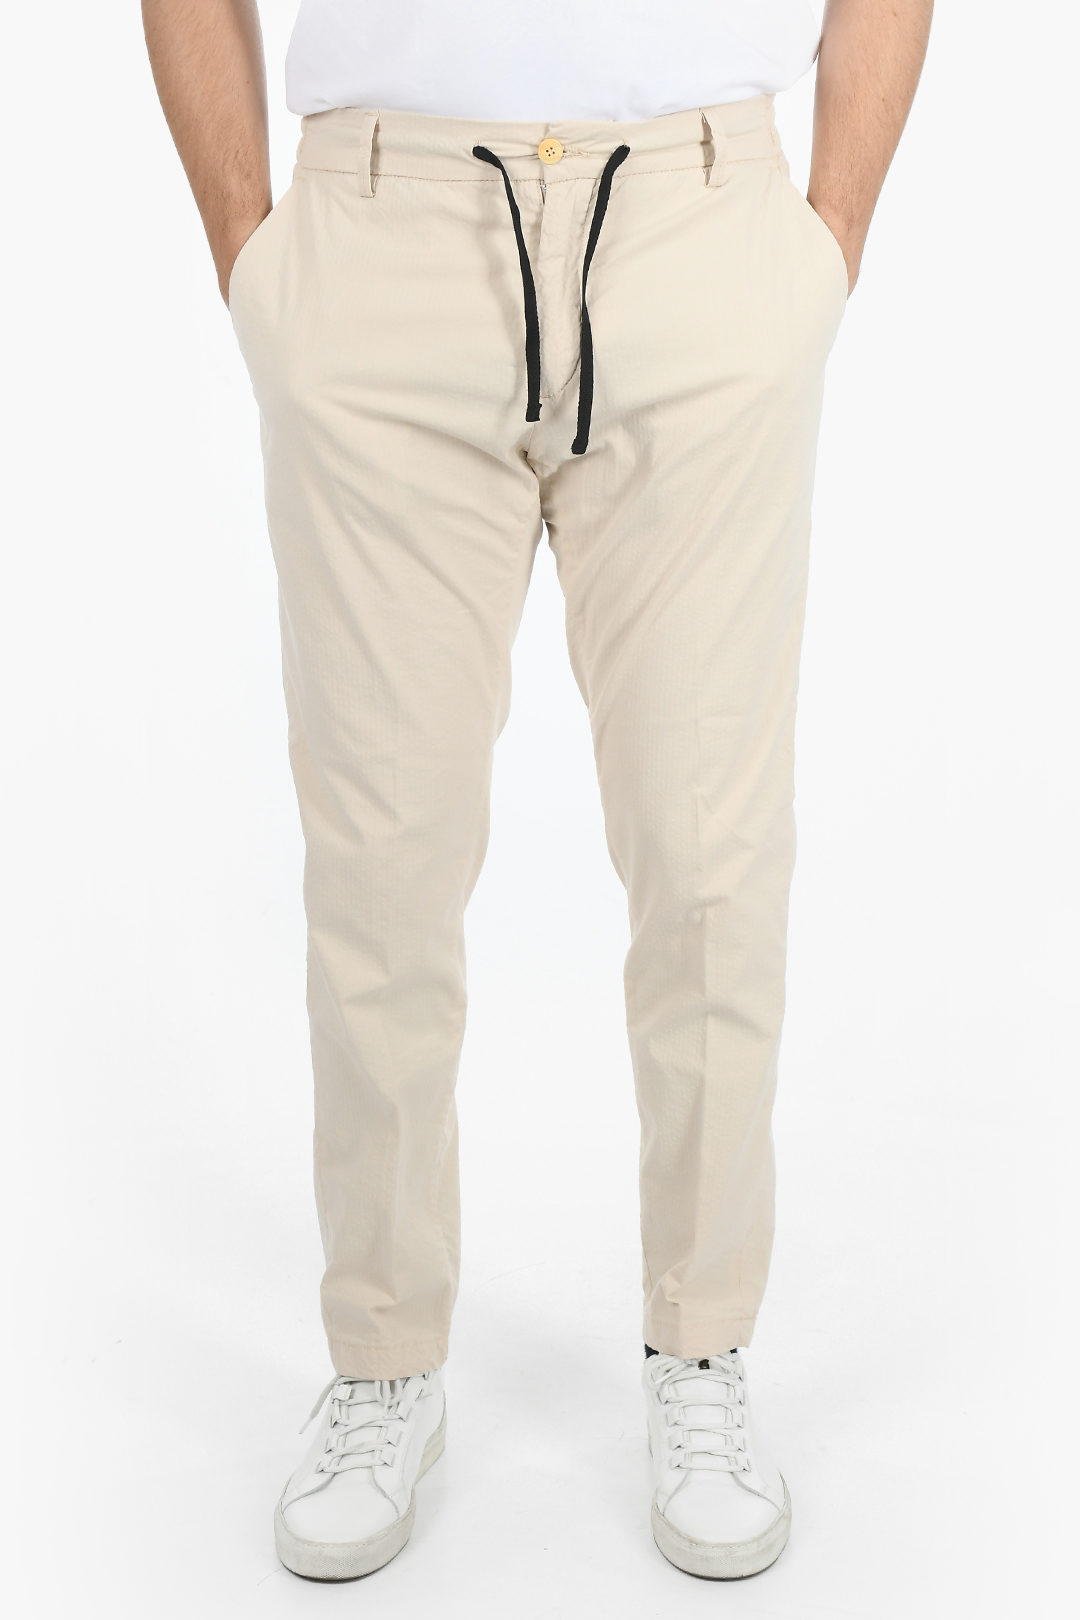 Maison Clochard Cotton BOULDER 3 Pockets Pants with Drawstring Waist men -  Glamood Outlet